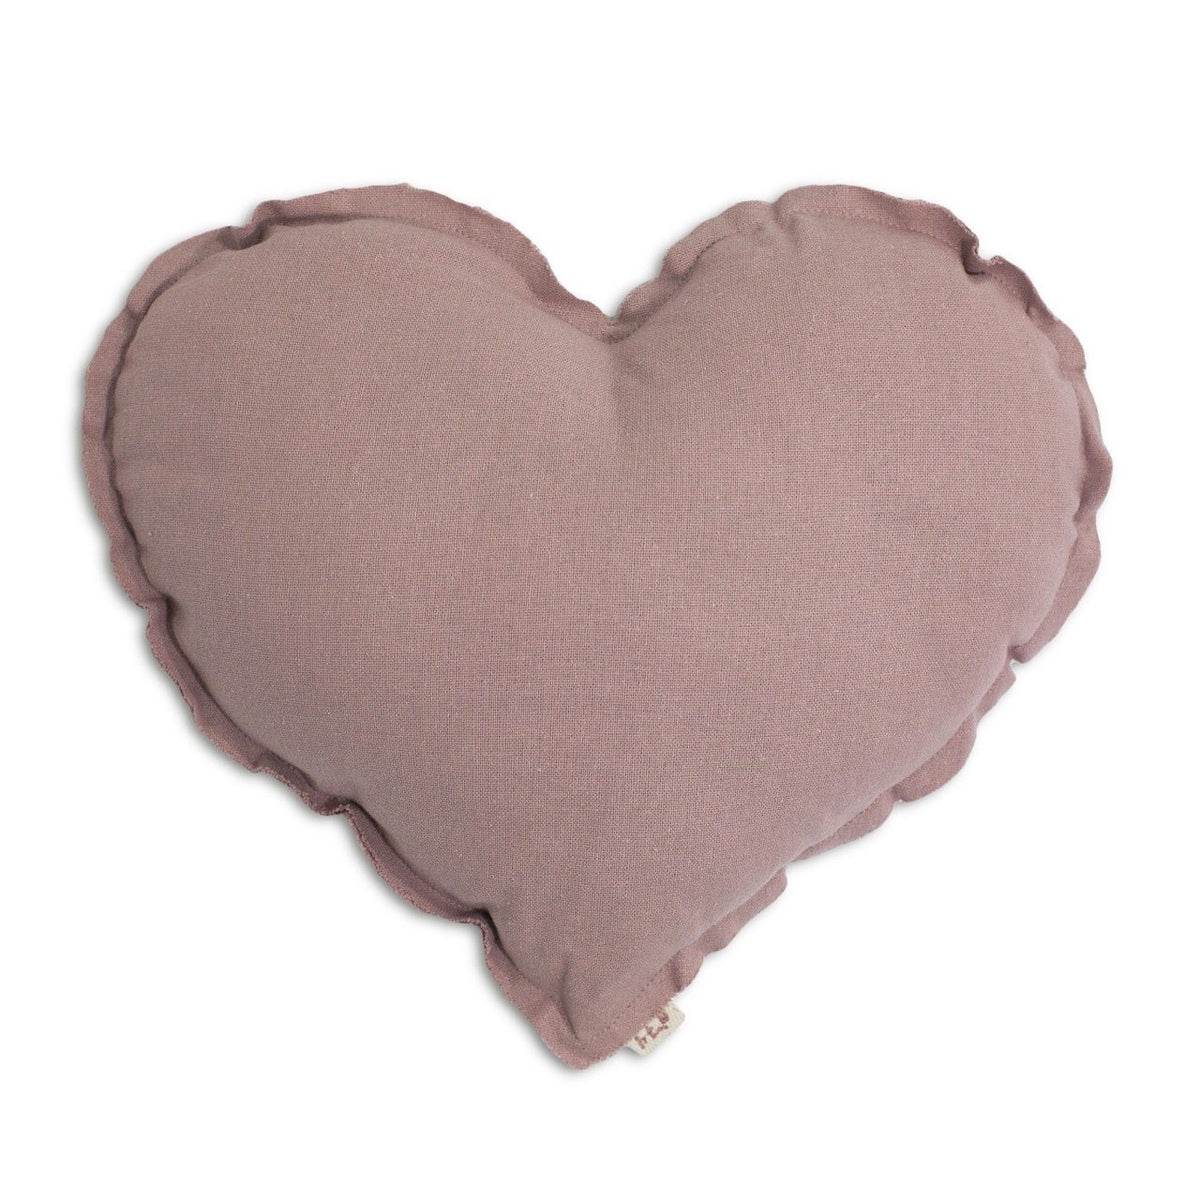 cushion - Numero74 | heart cushion thai cotton | small | dusty pink - mondocherry